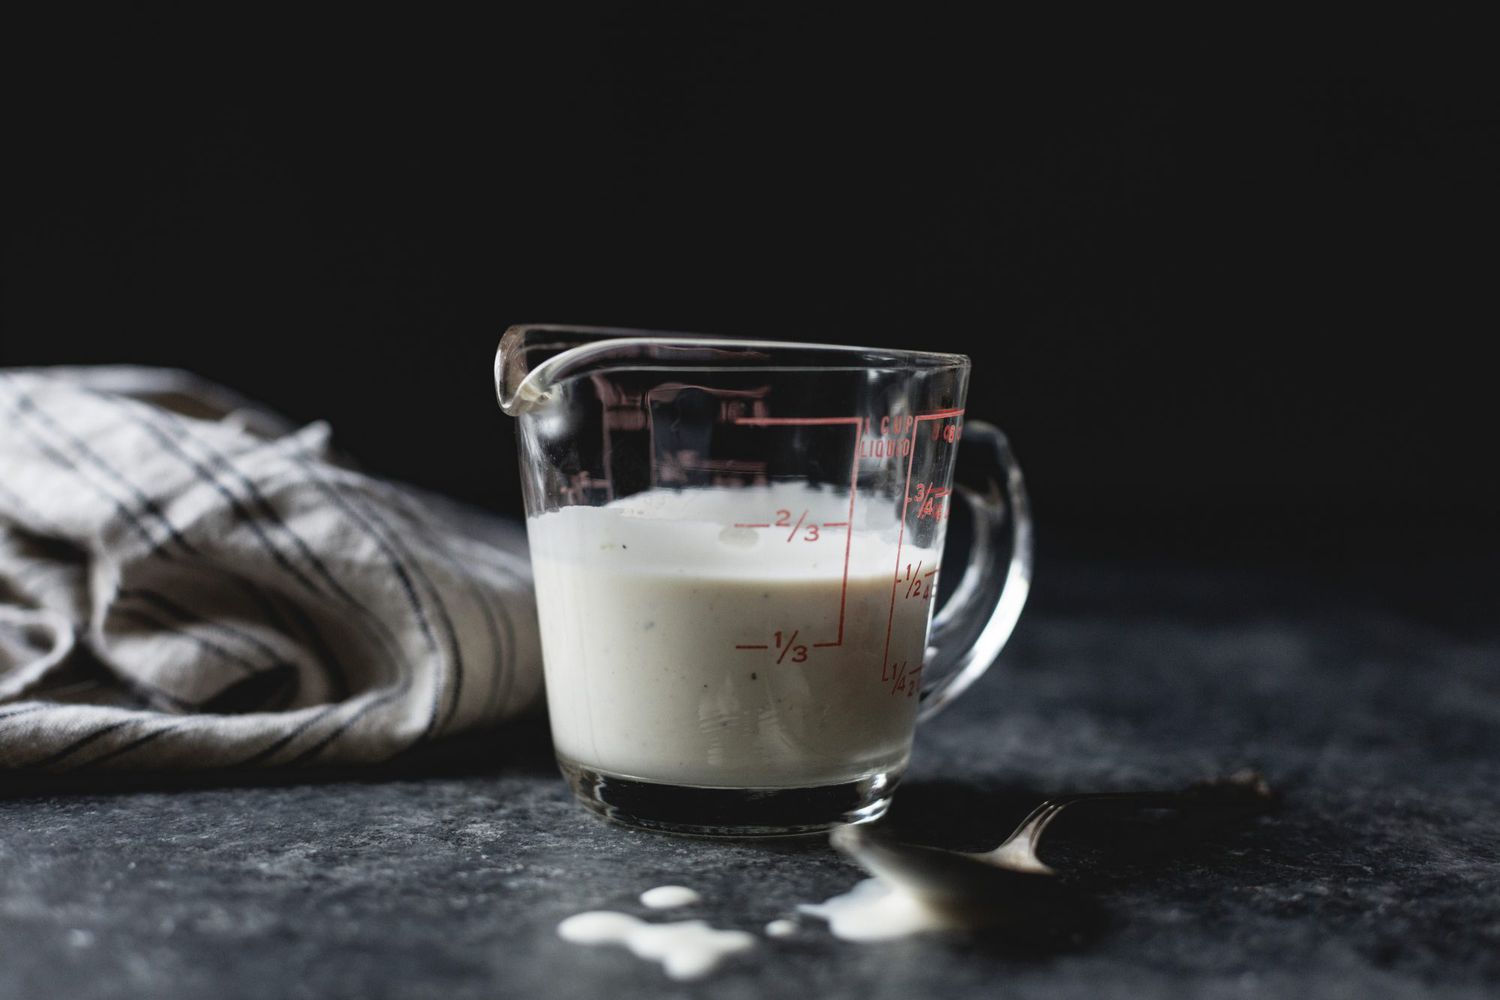 buttermilk in a measuring cup